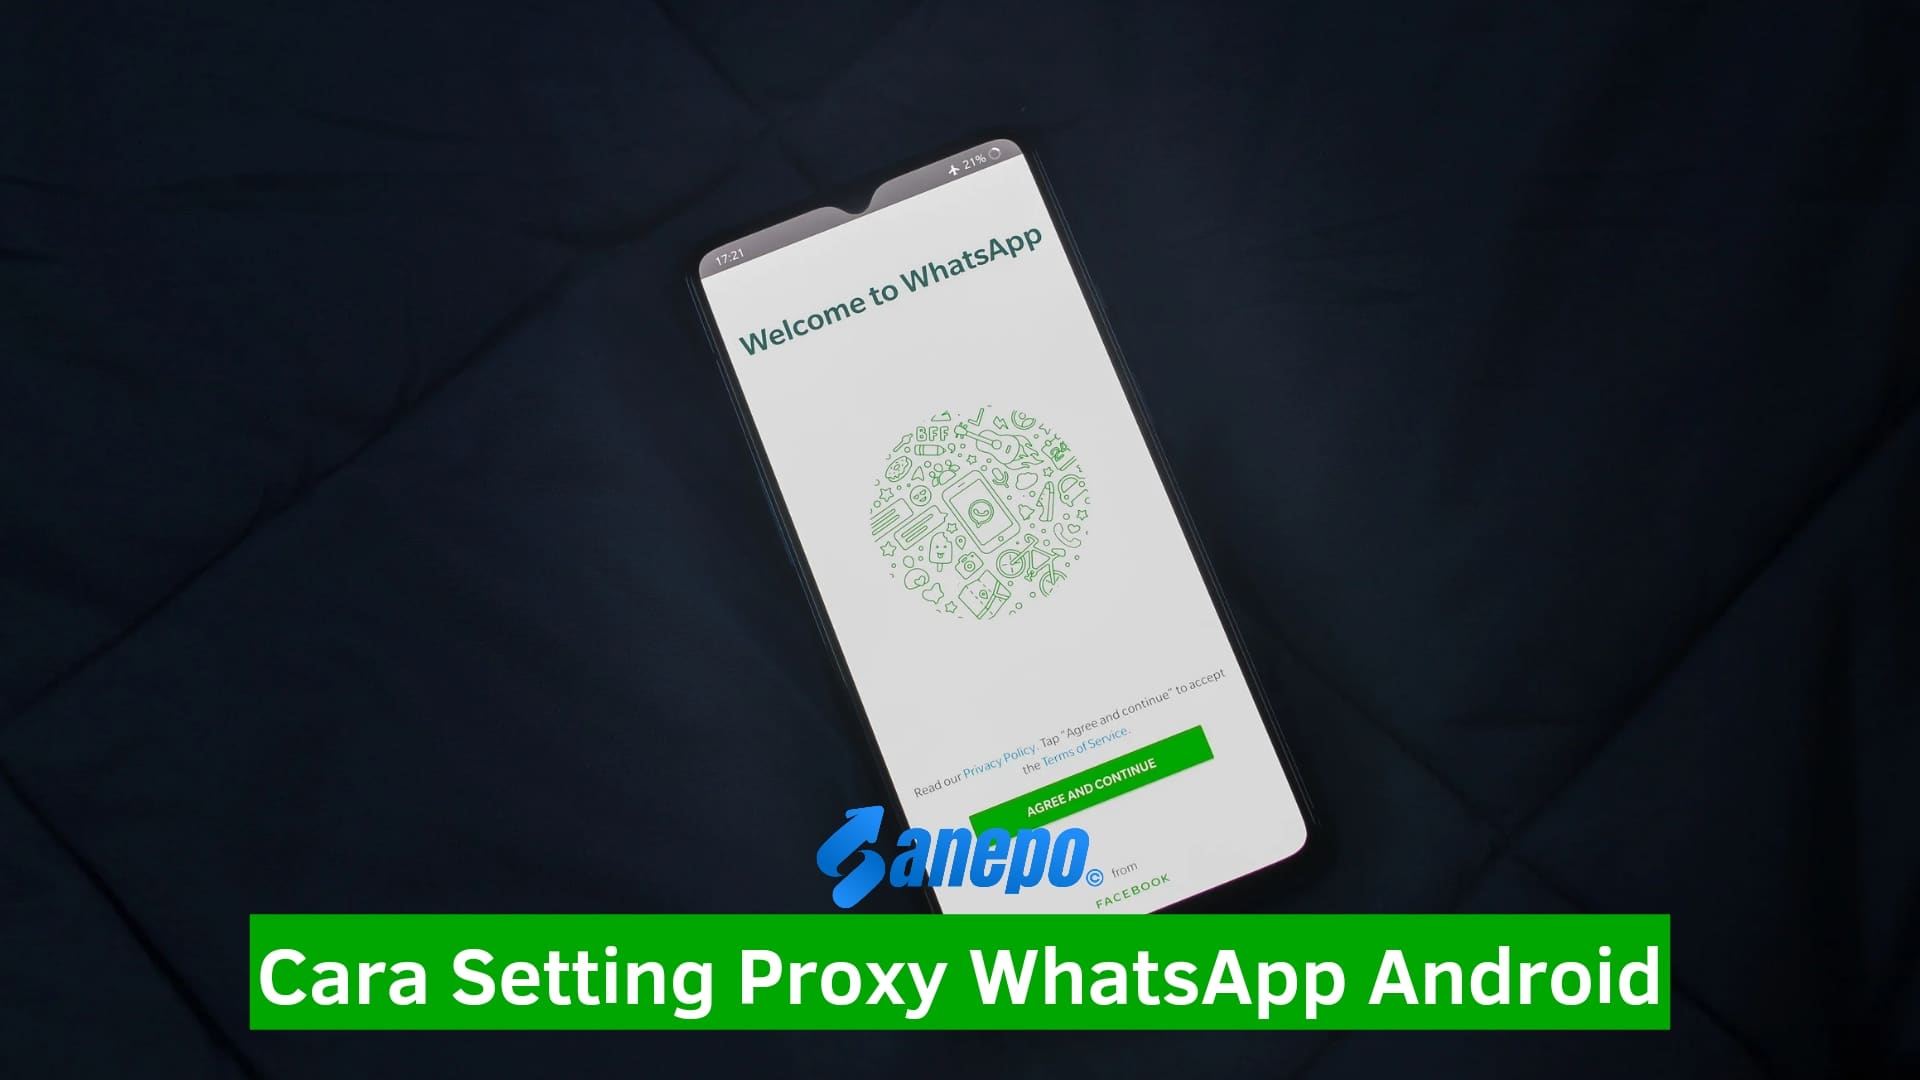 Proxy WhatsApp Android